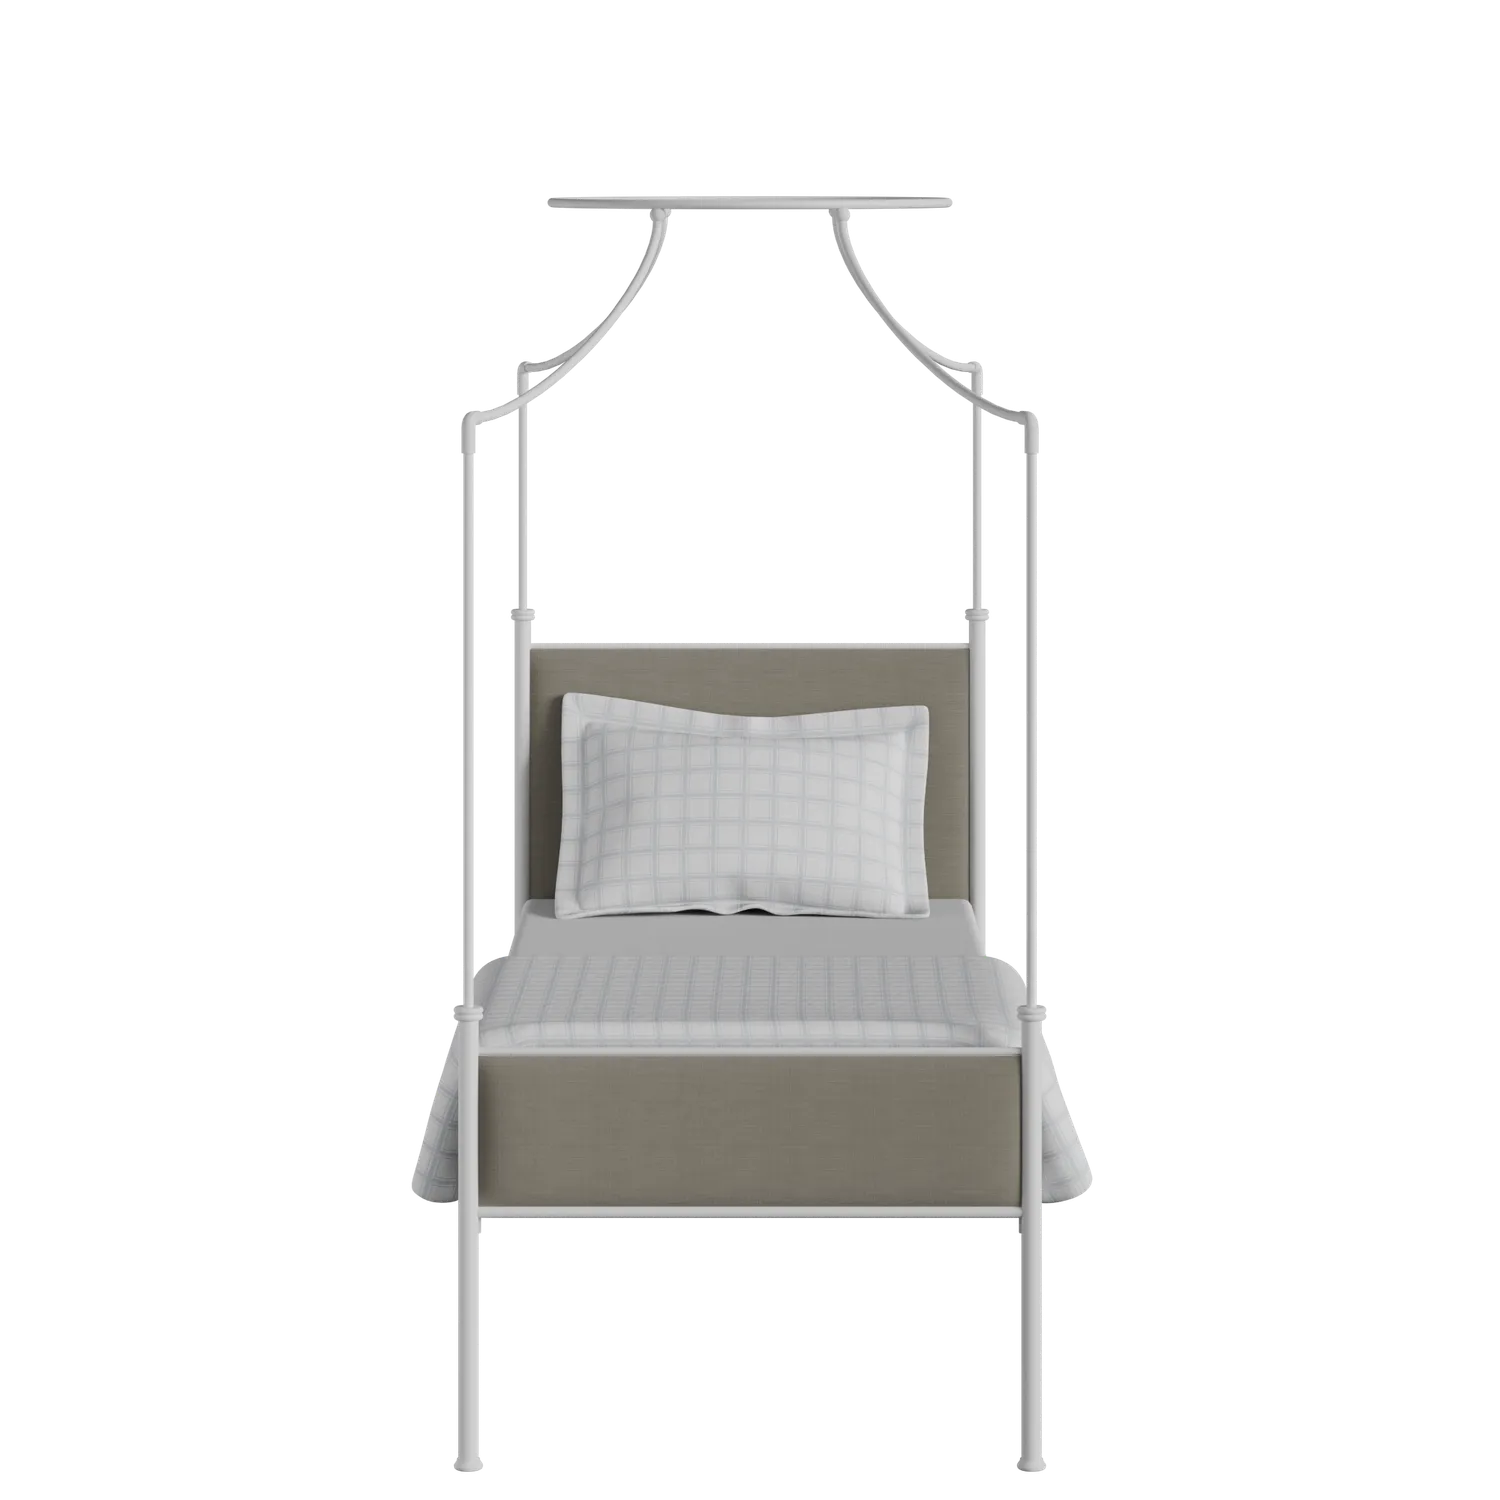 Waterloo iron/metal single bed in white